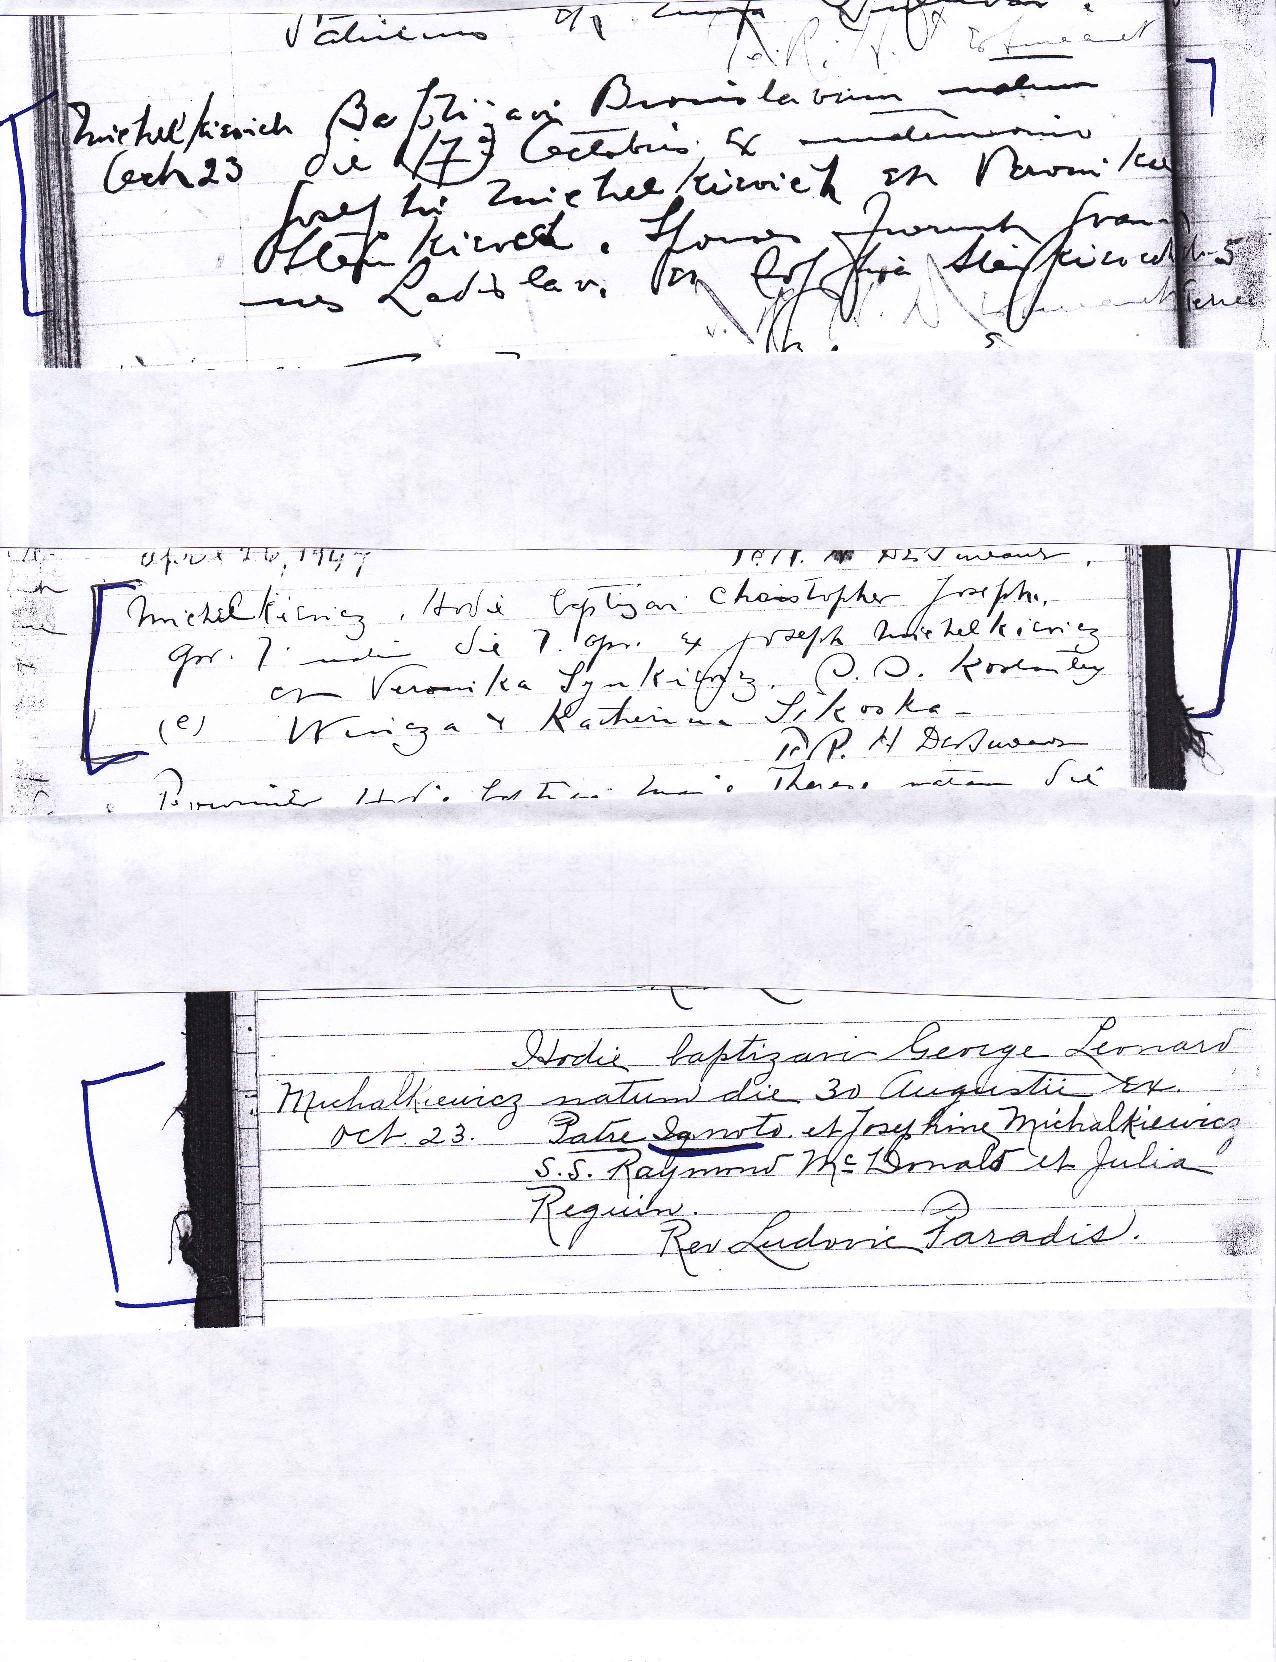 Michalkiewicz baptism records from St. Joseph church Versailles-Occum, CT.jpg